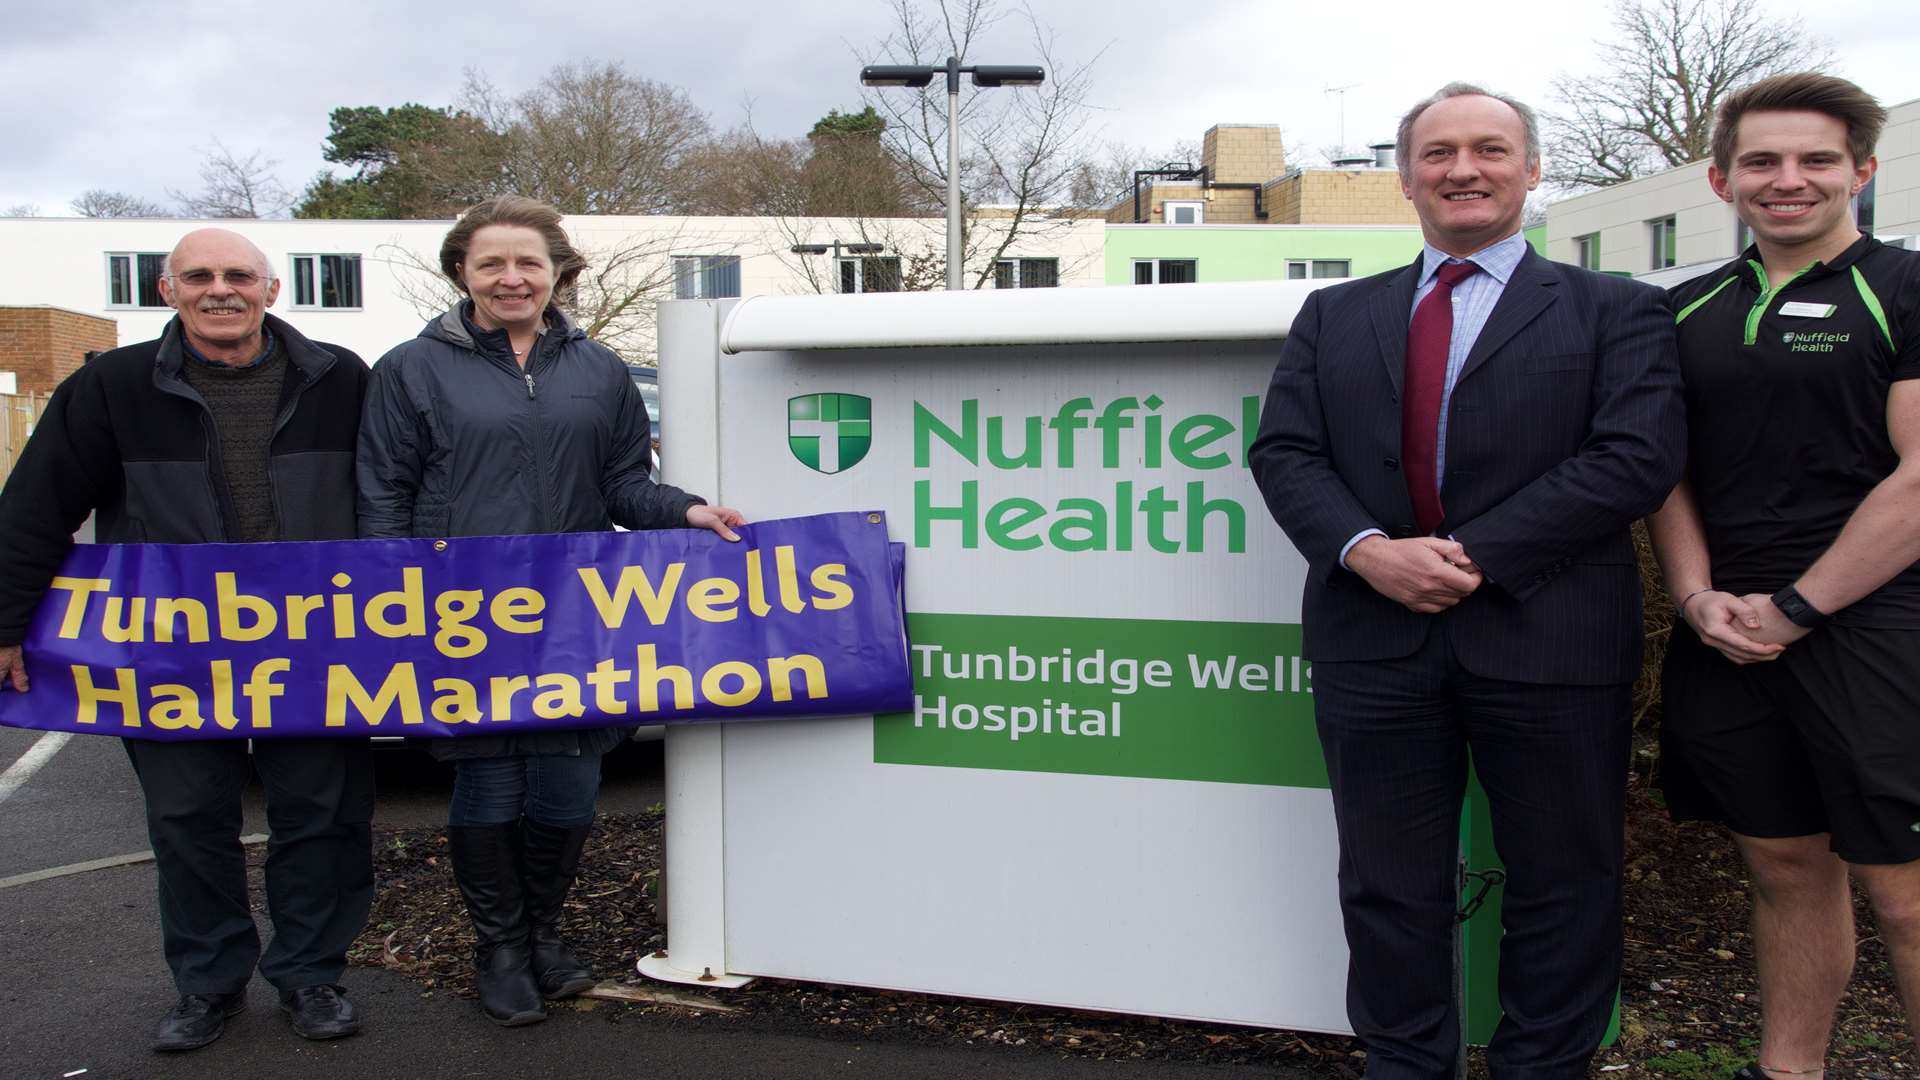 Mark Taylor and Sarah Barker of the Tunbridge Wells Half Marathon committee with Joe Hazel, director of Nuffield Health Tunbridge Wells Hospital and Pierce Robinson